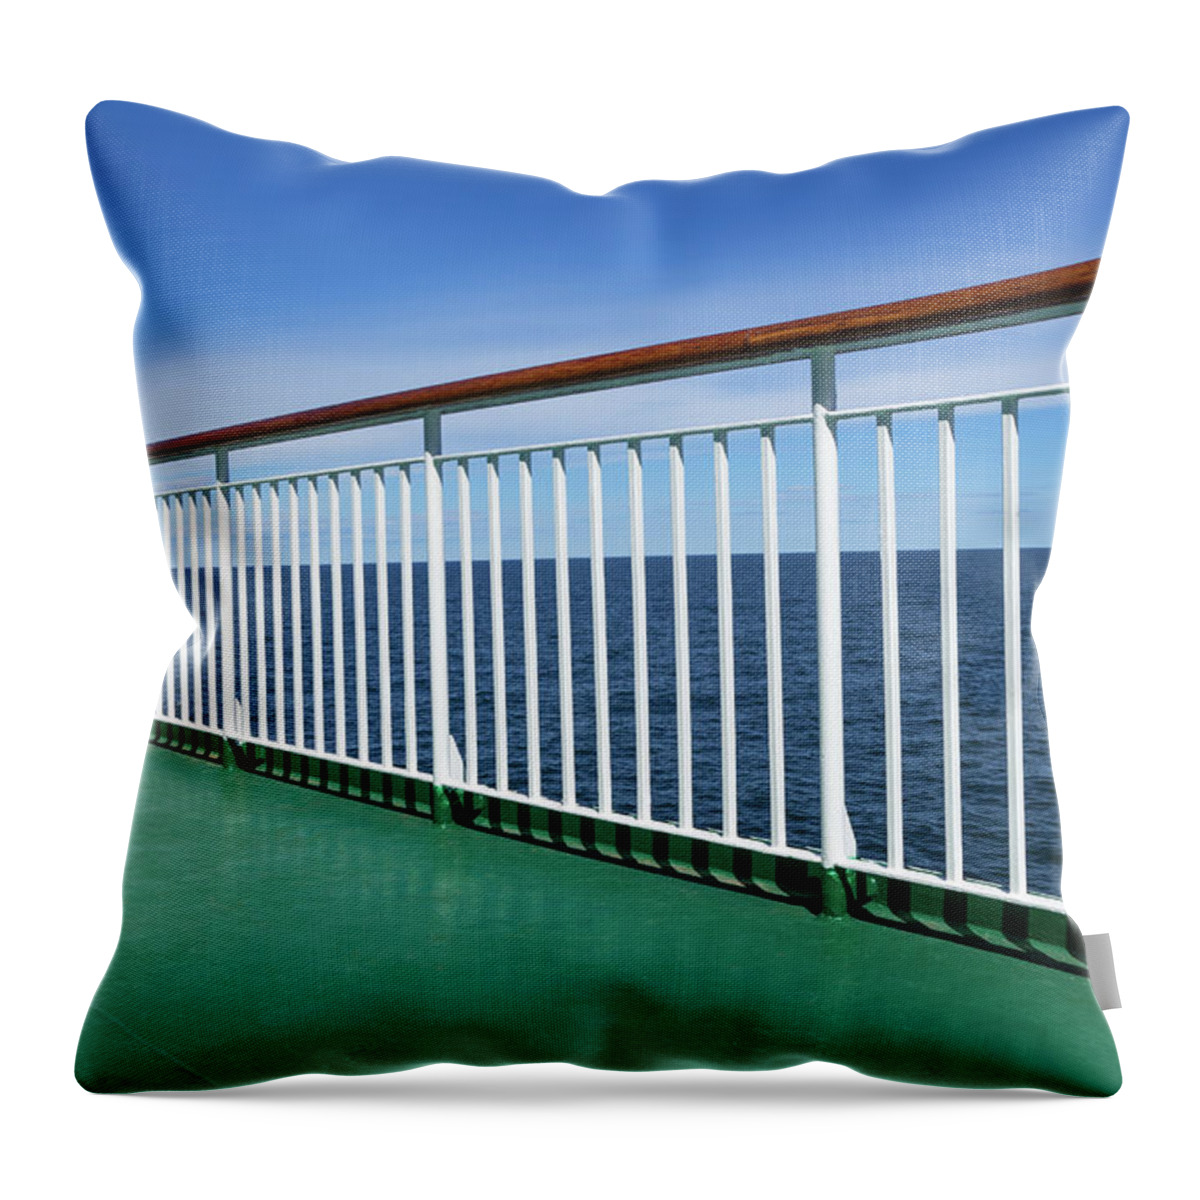 Sea Throw Pillow featuring the photograph Green deck of a passenger ship by GoodMood Art